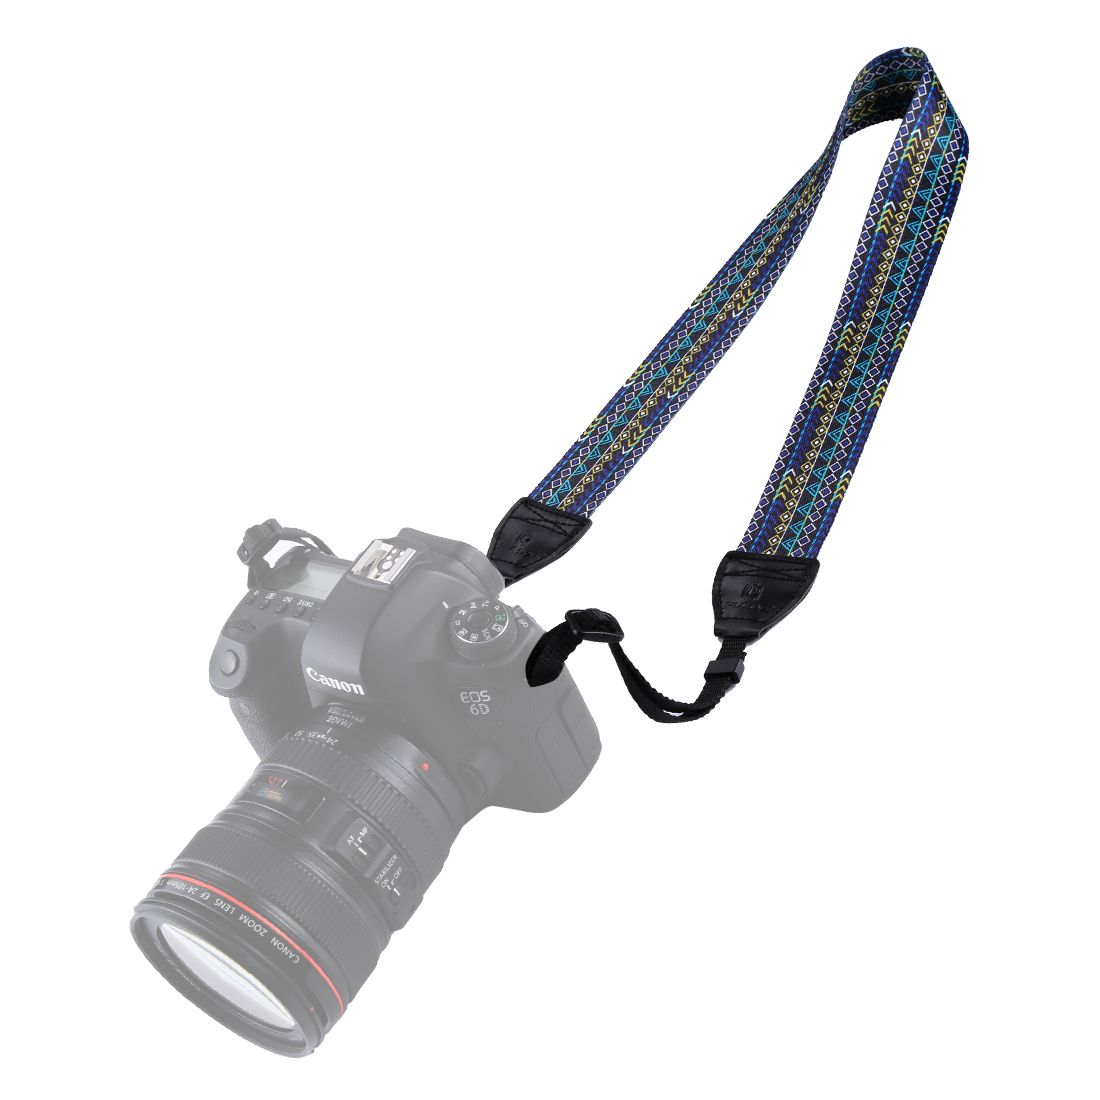 PULUZ-PU6008A-Retro-Ethnic-Style-Multi-color-Series-Shoulder-Neck-Strap-for-SLR-DSLR-Cameras-1251142